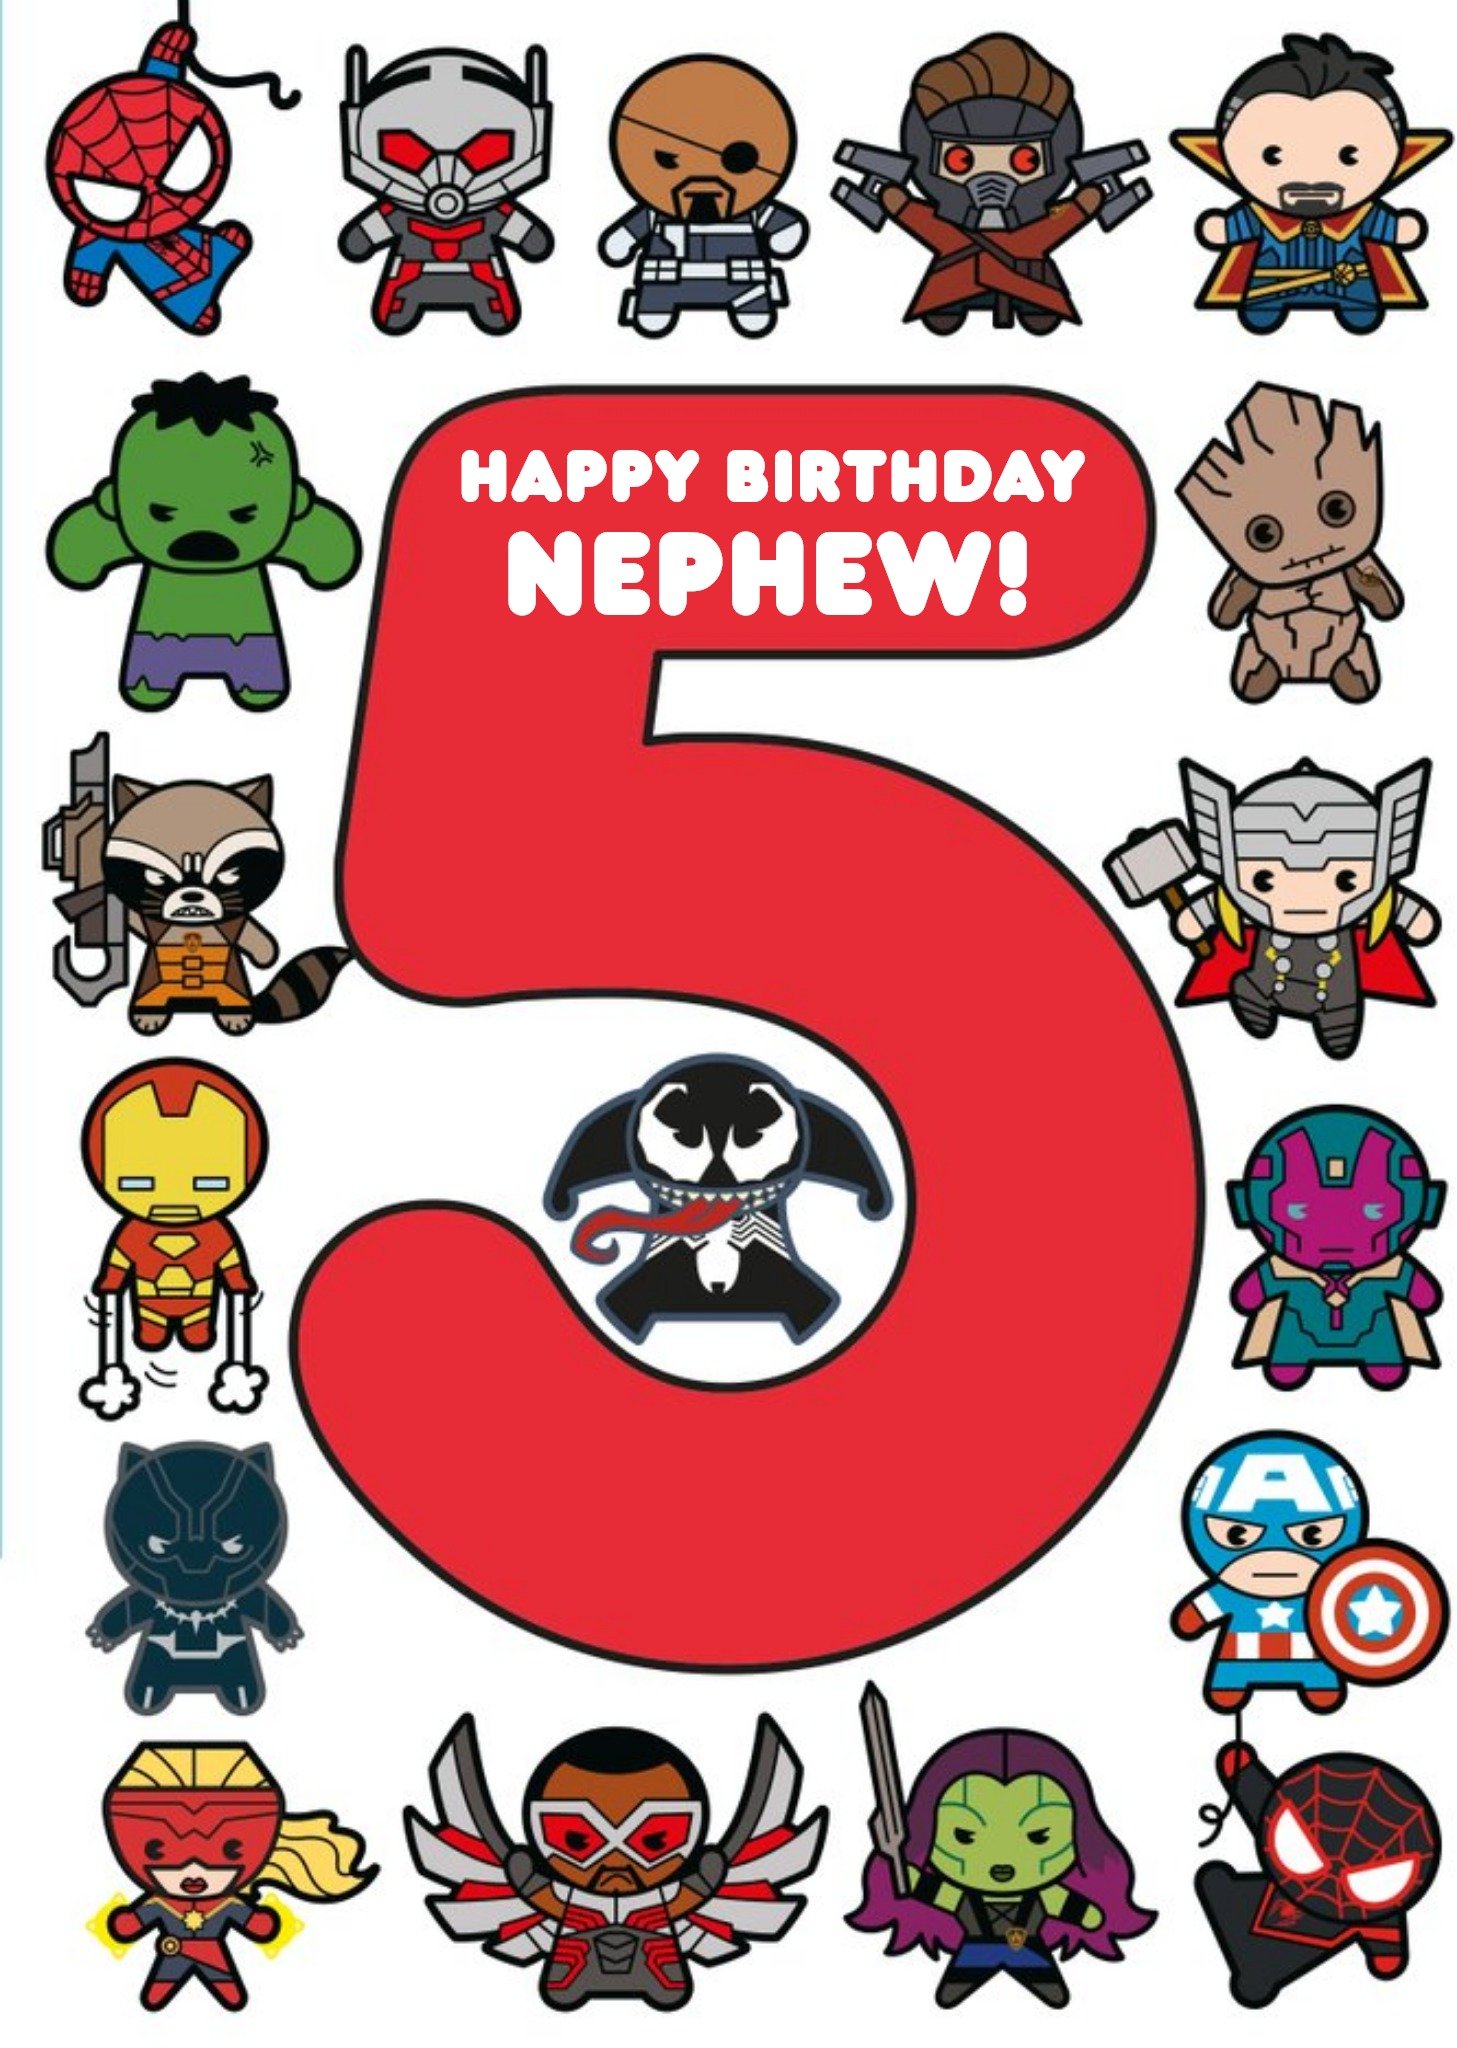 the Avengers Marvel Comics Cartoon Characters Nephew 5th Birthday Card, Large